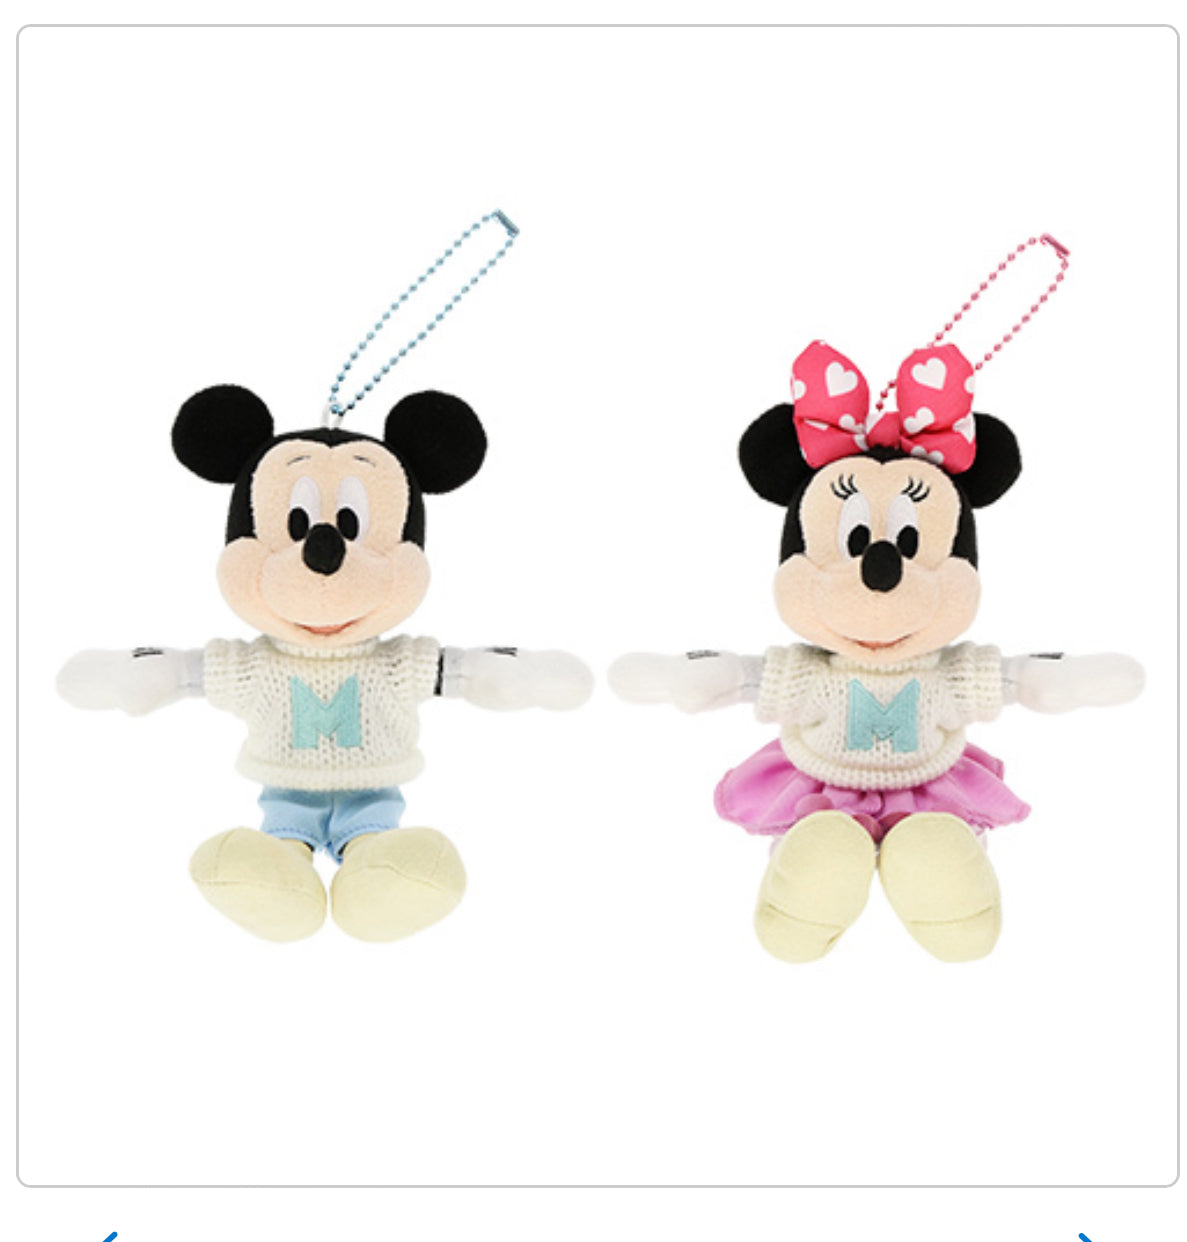 Tokyo Disney valentines Mickey and Minnie keychain plush badge release date 2/1